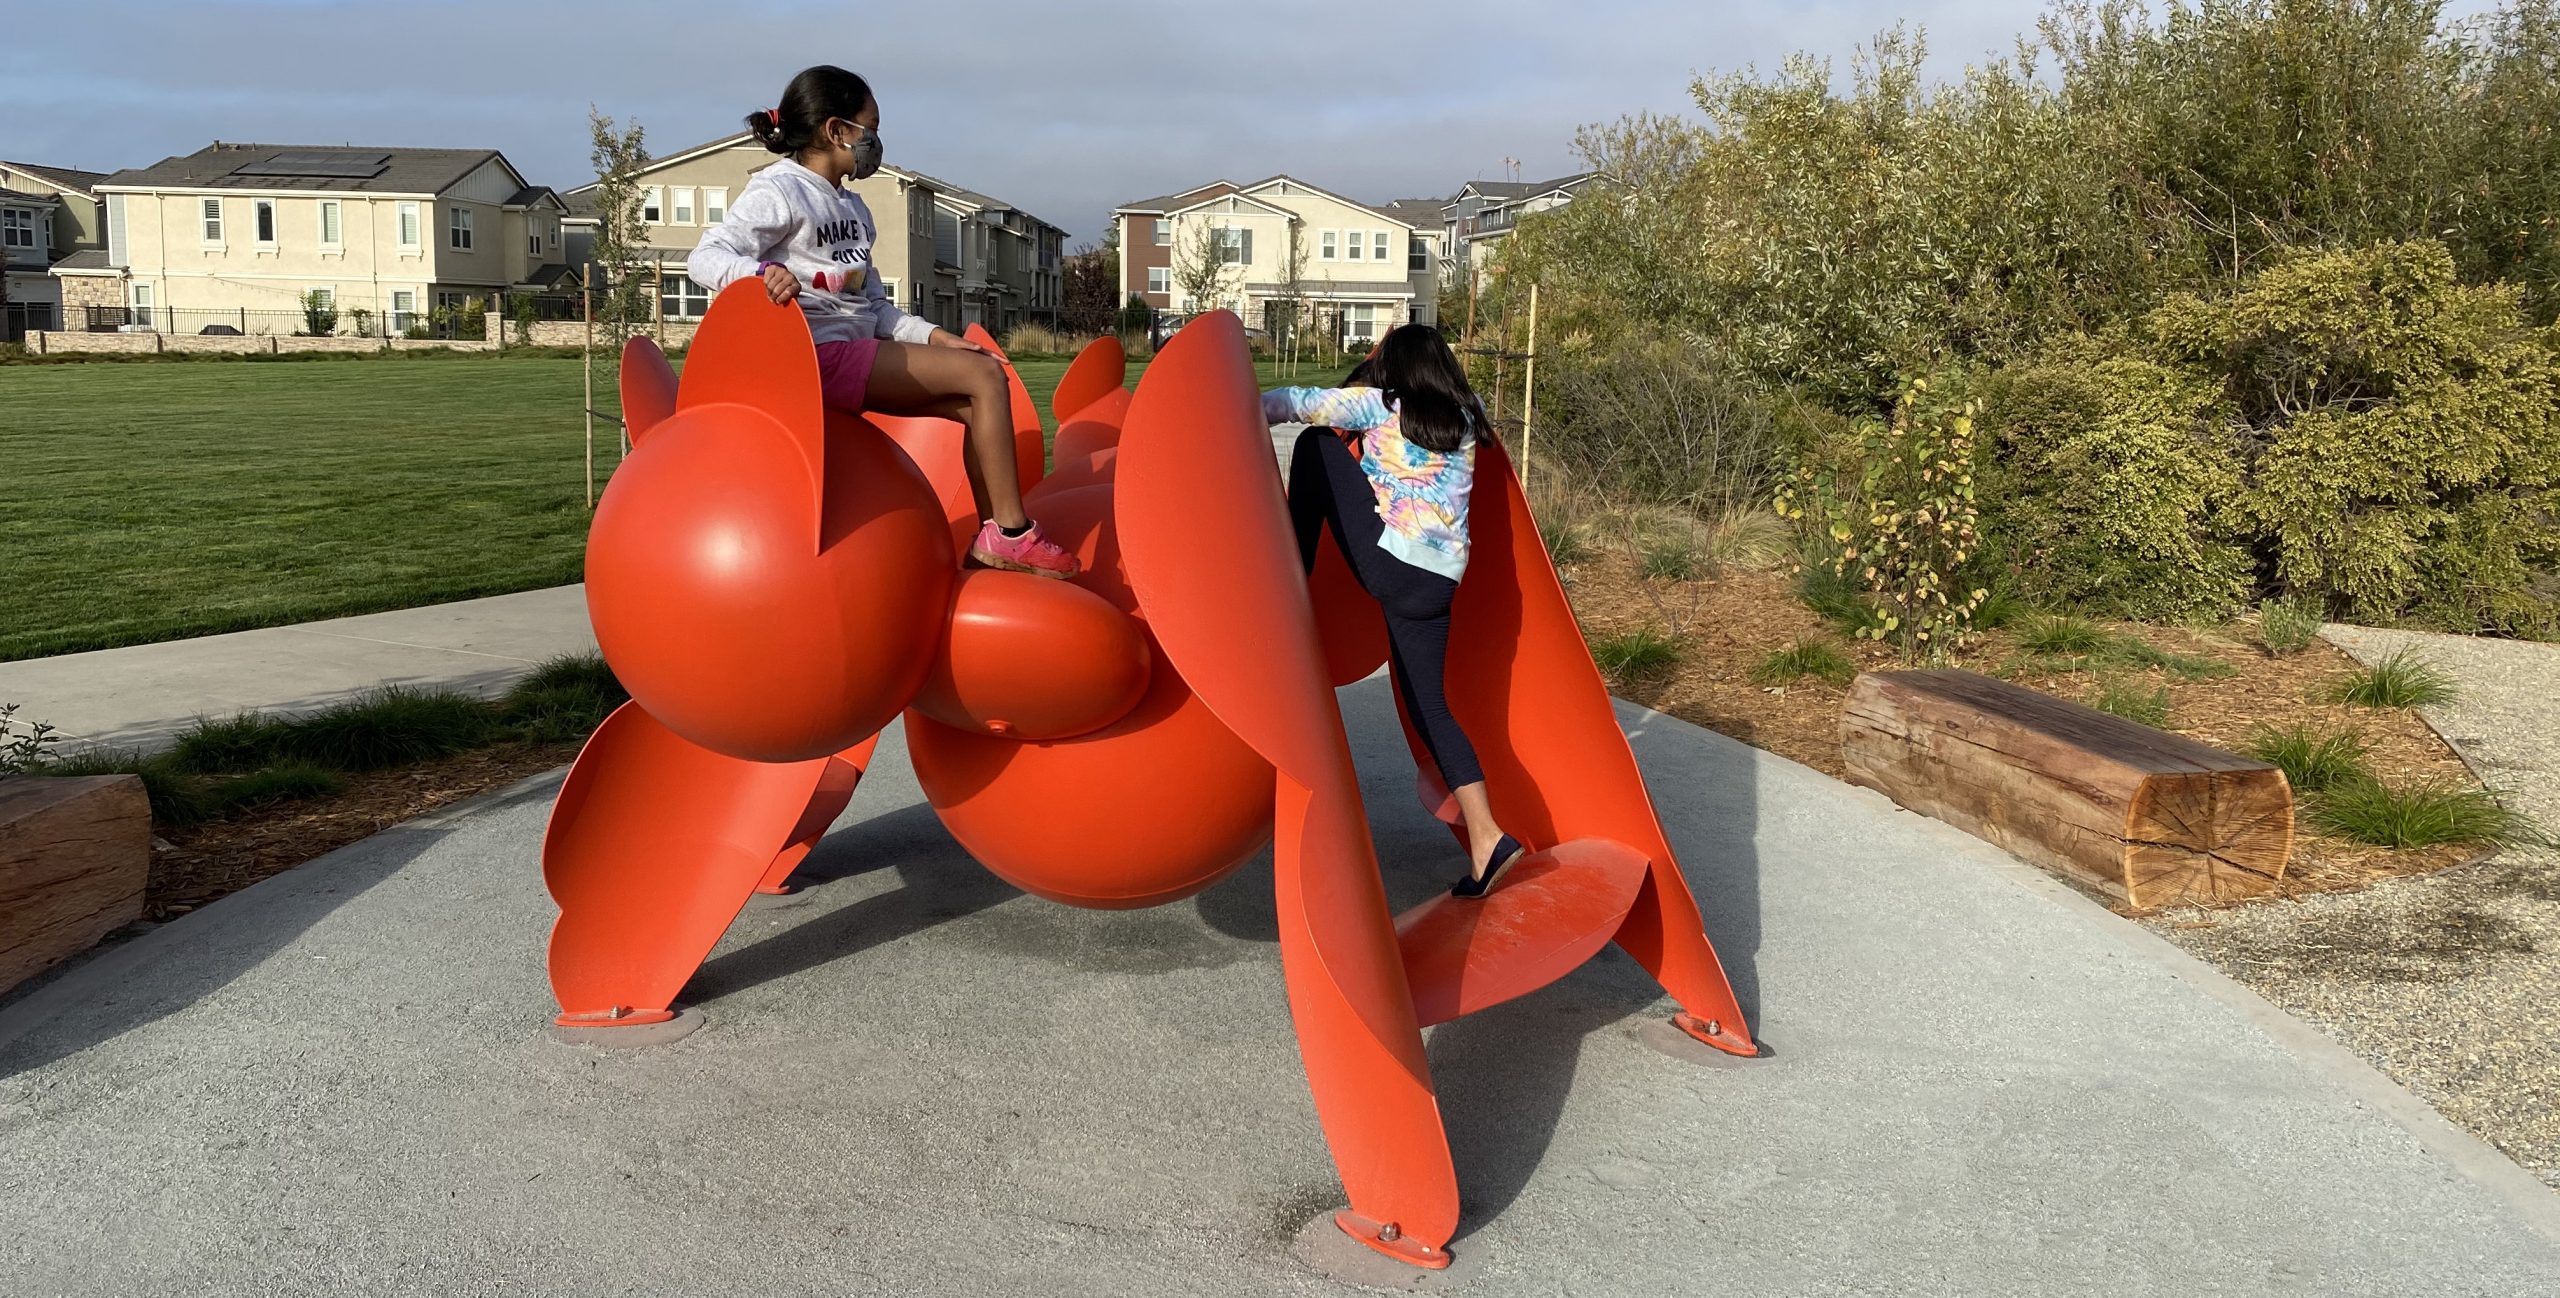 Arachnicat, an eco-friendly biomorphic sculpture & play structure